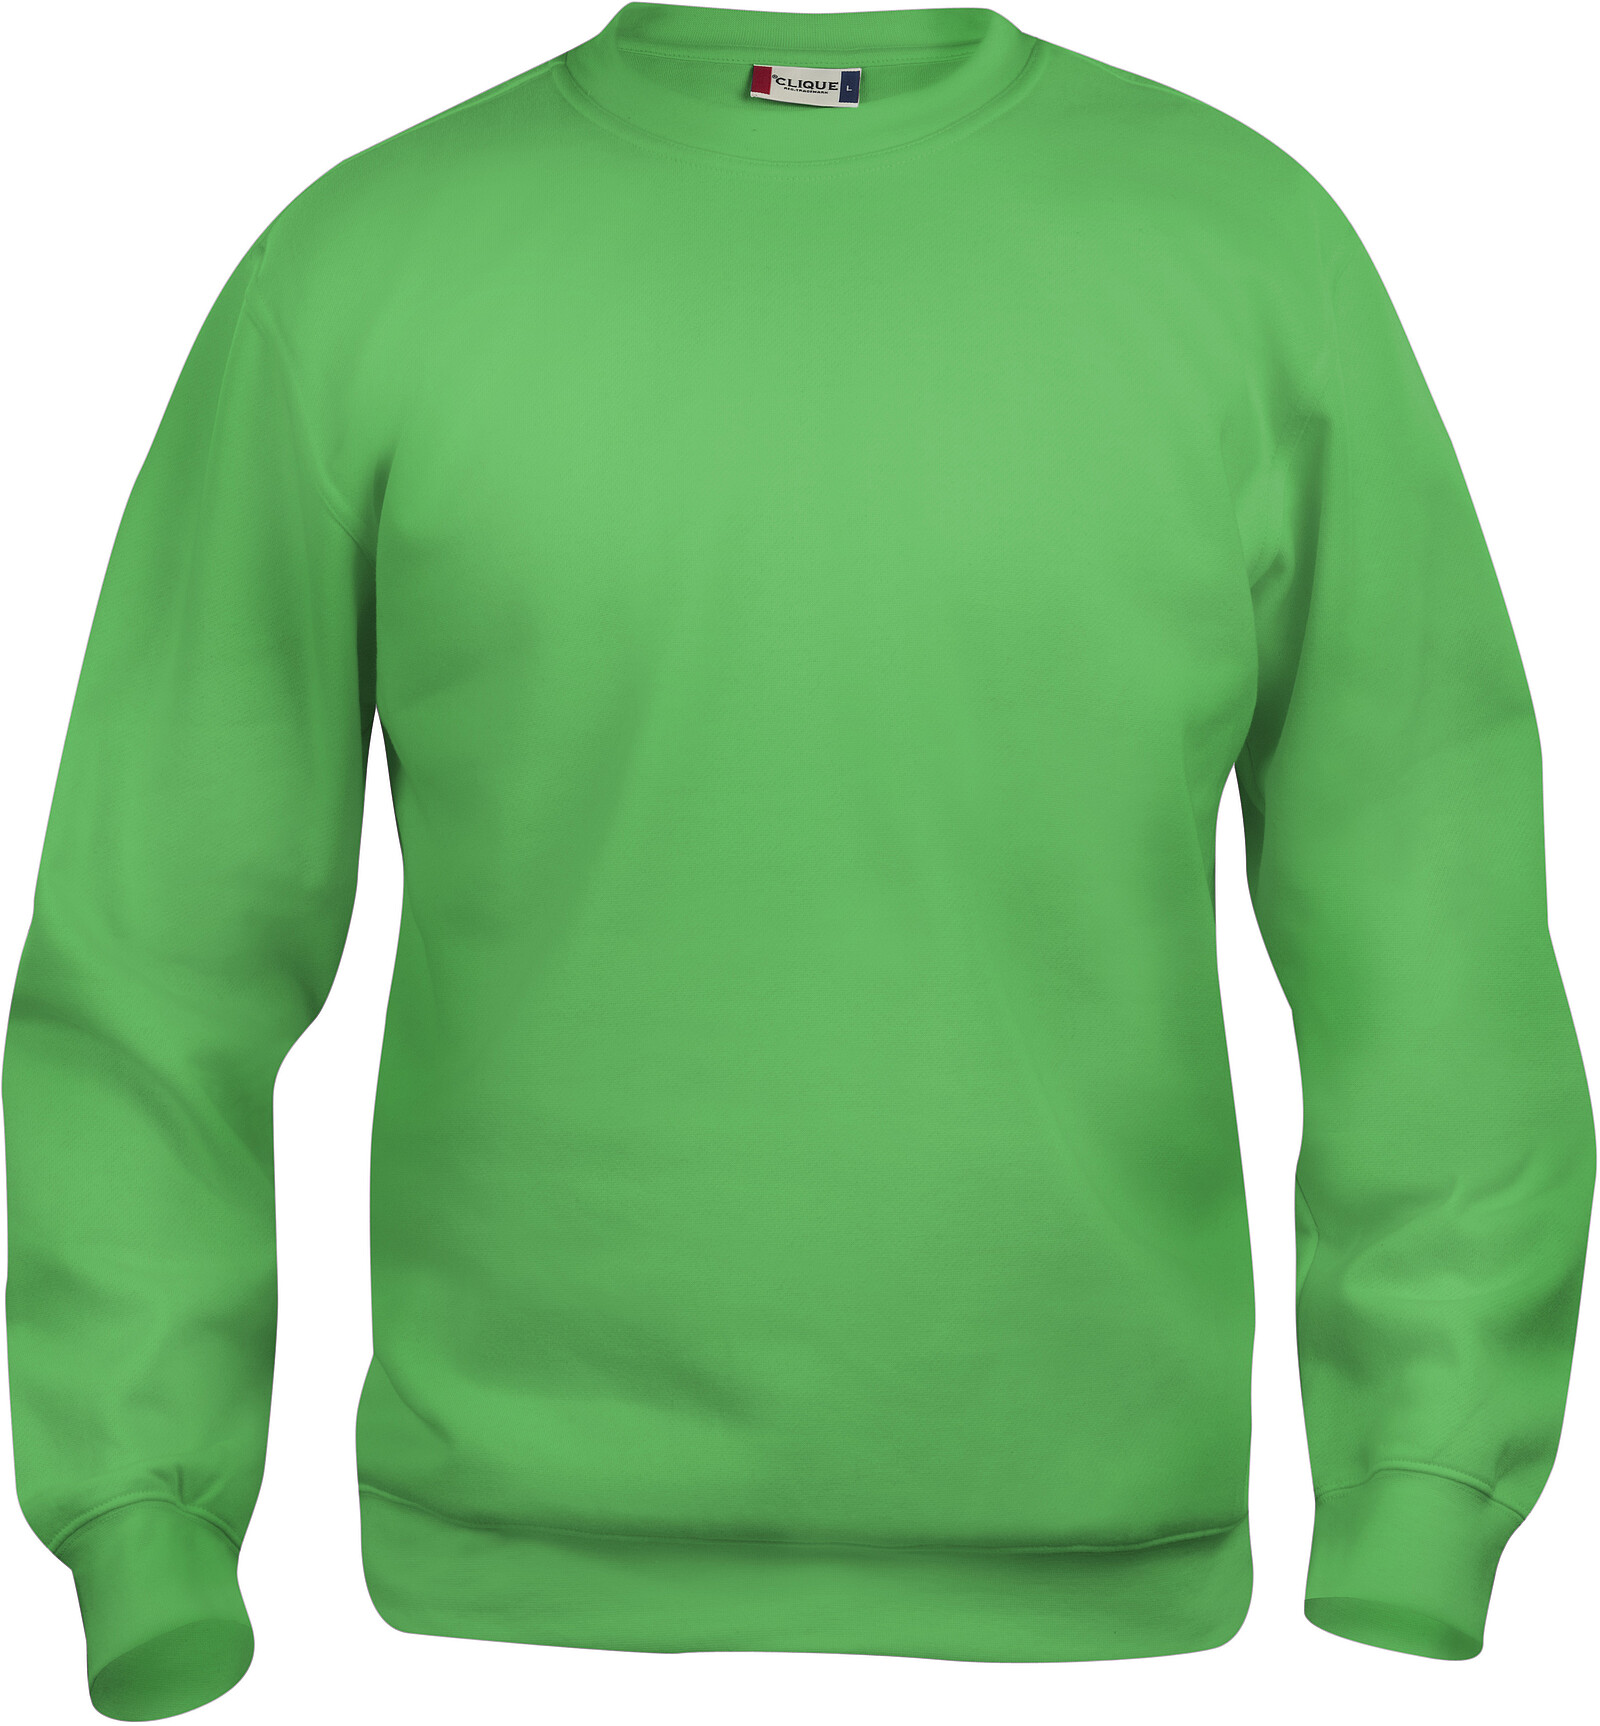 Sweatshirt Basic Roundneck, apfelgrün, Gr. S 